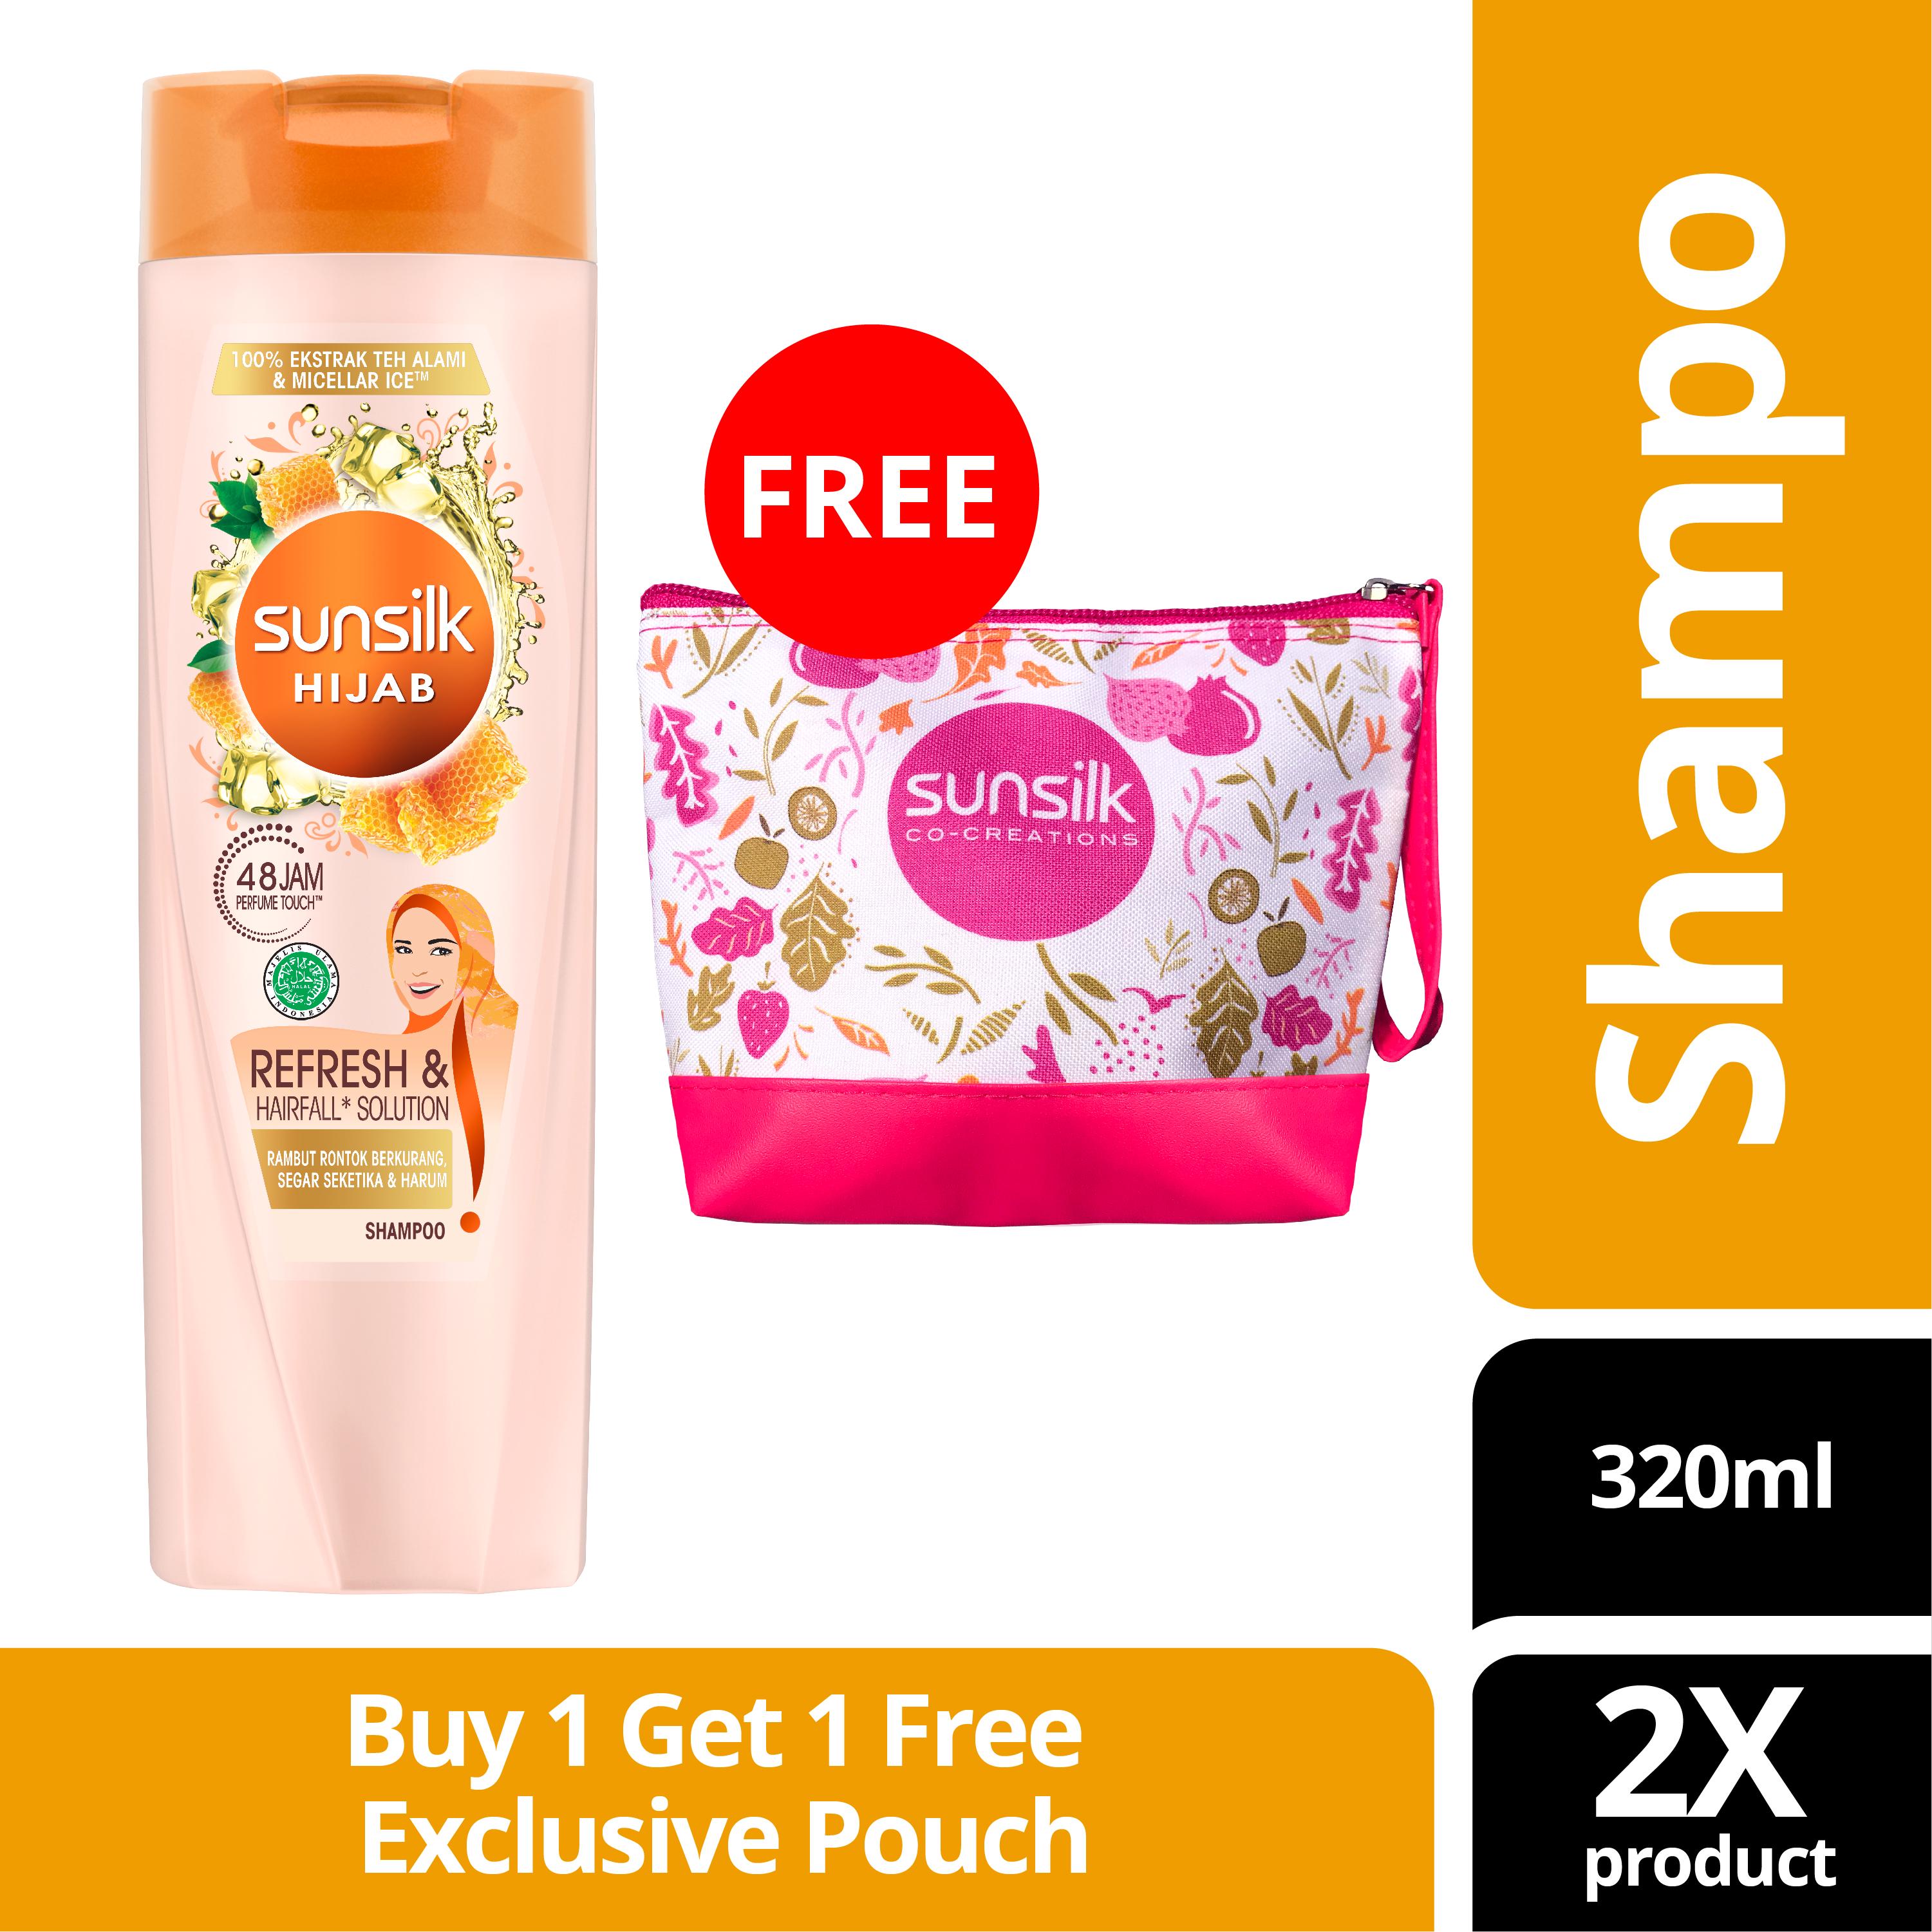 Sunsilk Hijab Recharge Refresh & Hair Fall Solution Shampoo 320 ml Free Pouch